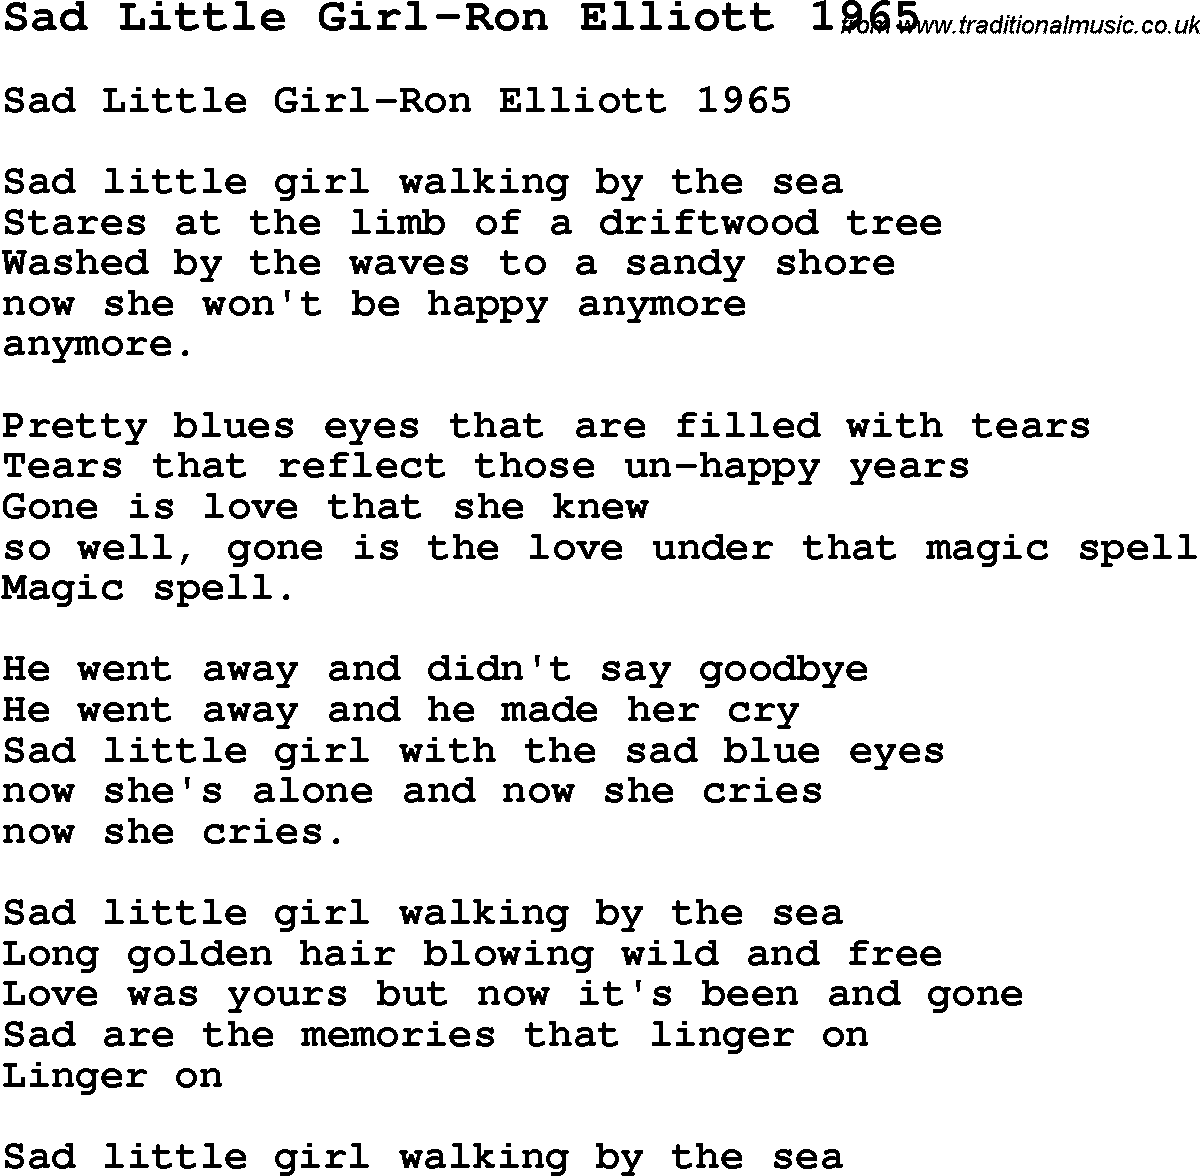 Skiffle Song Lyrics for Sad Little Girl-Ron Elliott 1965.